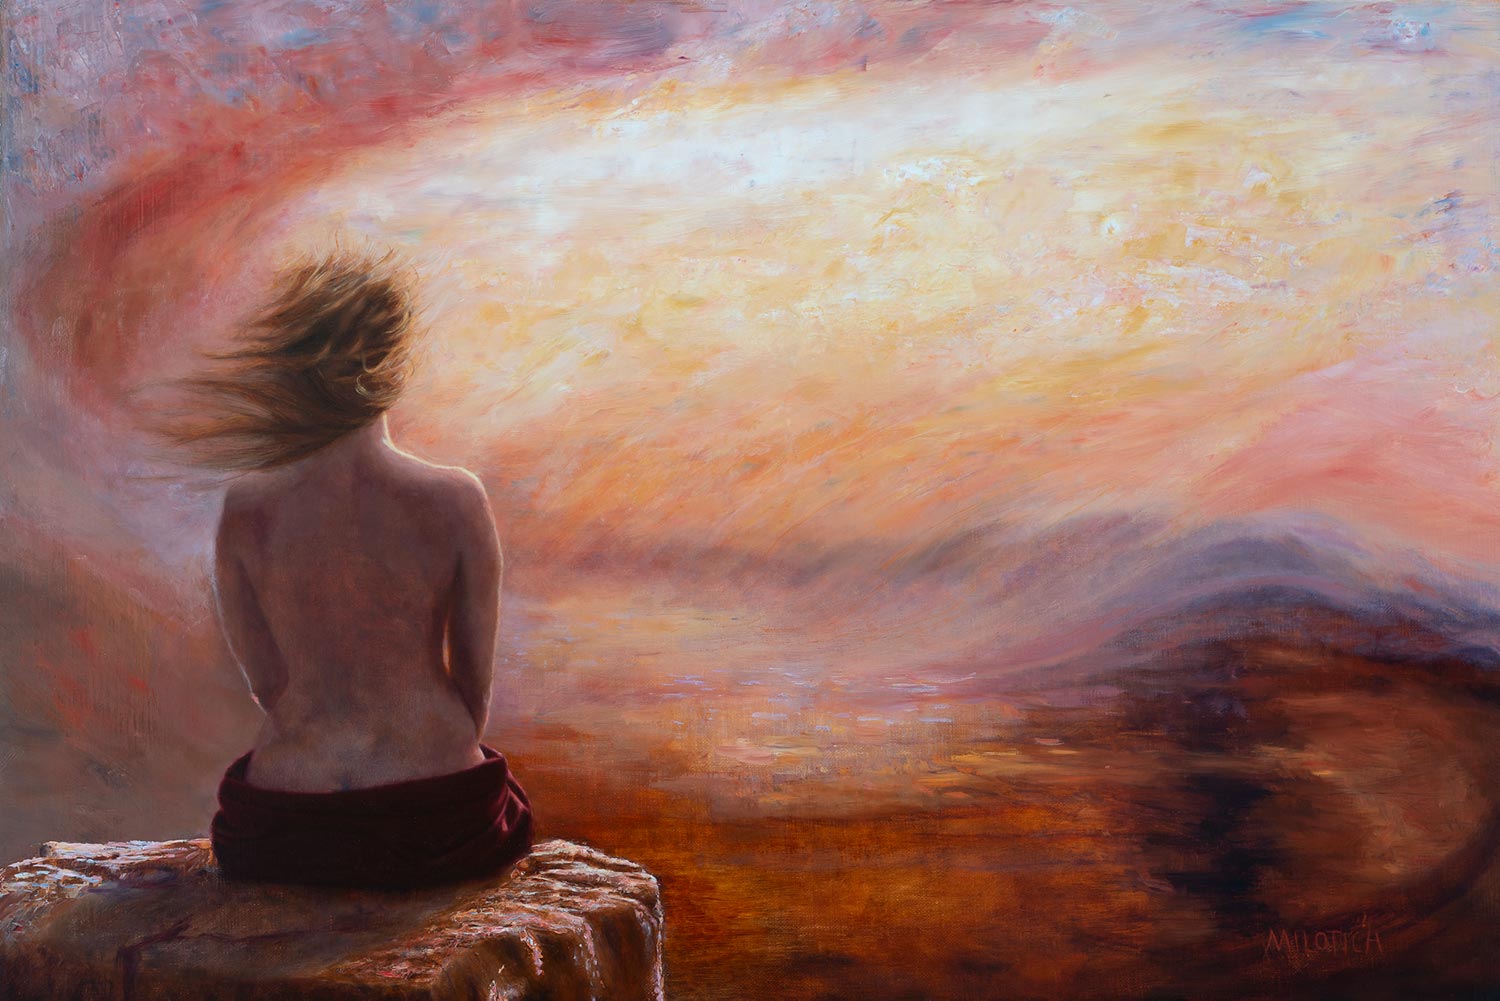 Spirit Rising, an original oil painting by Ute Milotich